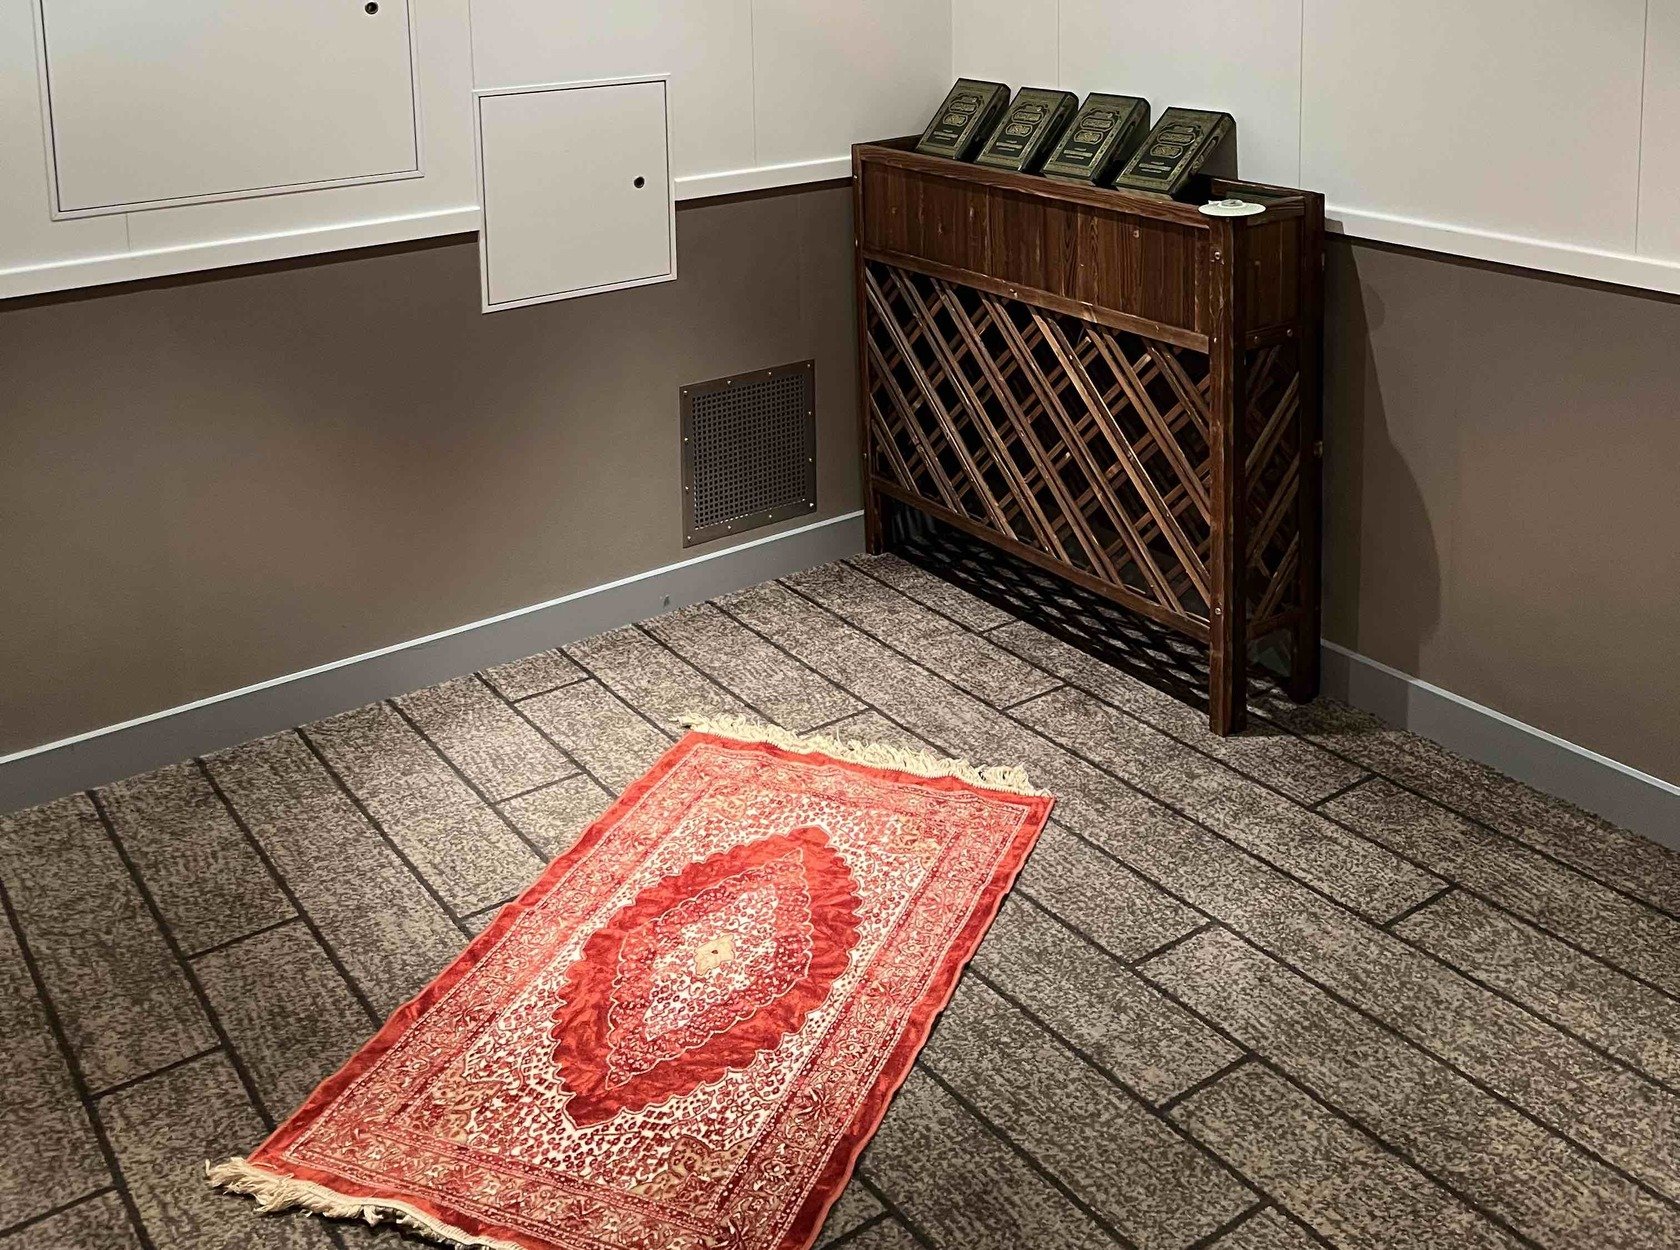 Prayer facilities with prayer mat, Quran and digital compass for Qiblah